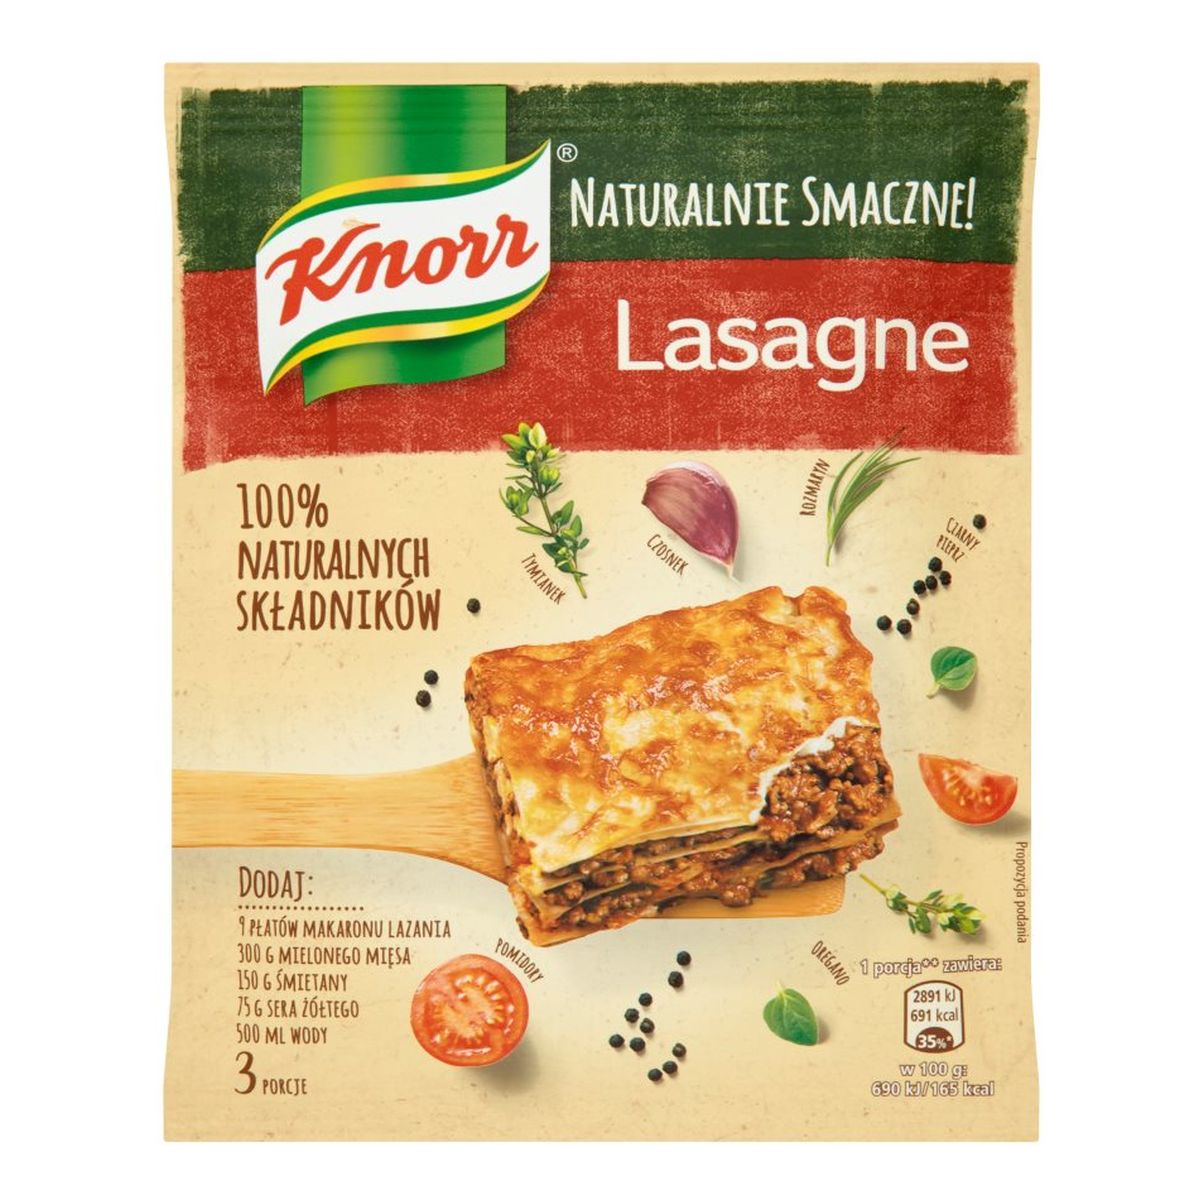 Knorr Naturalnie Smaczne! lasagne 43g